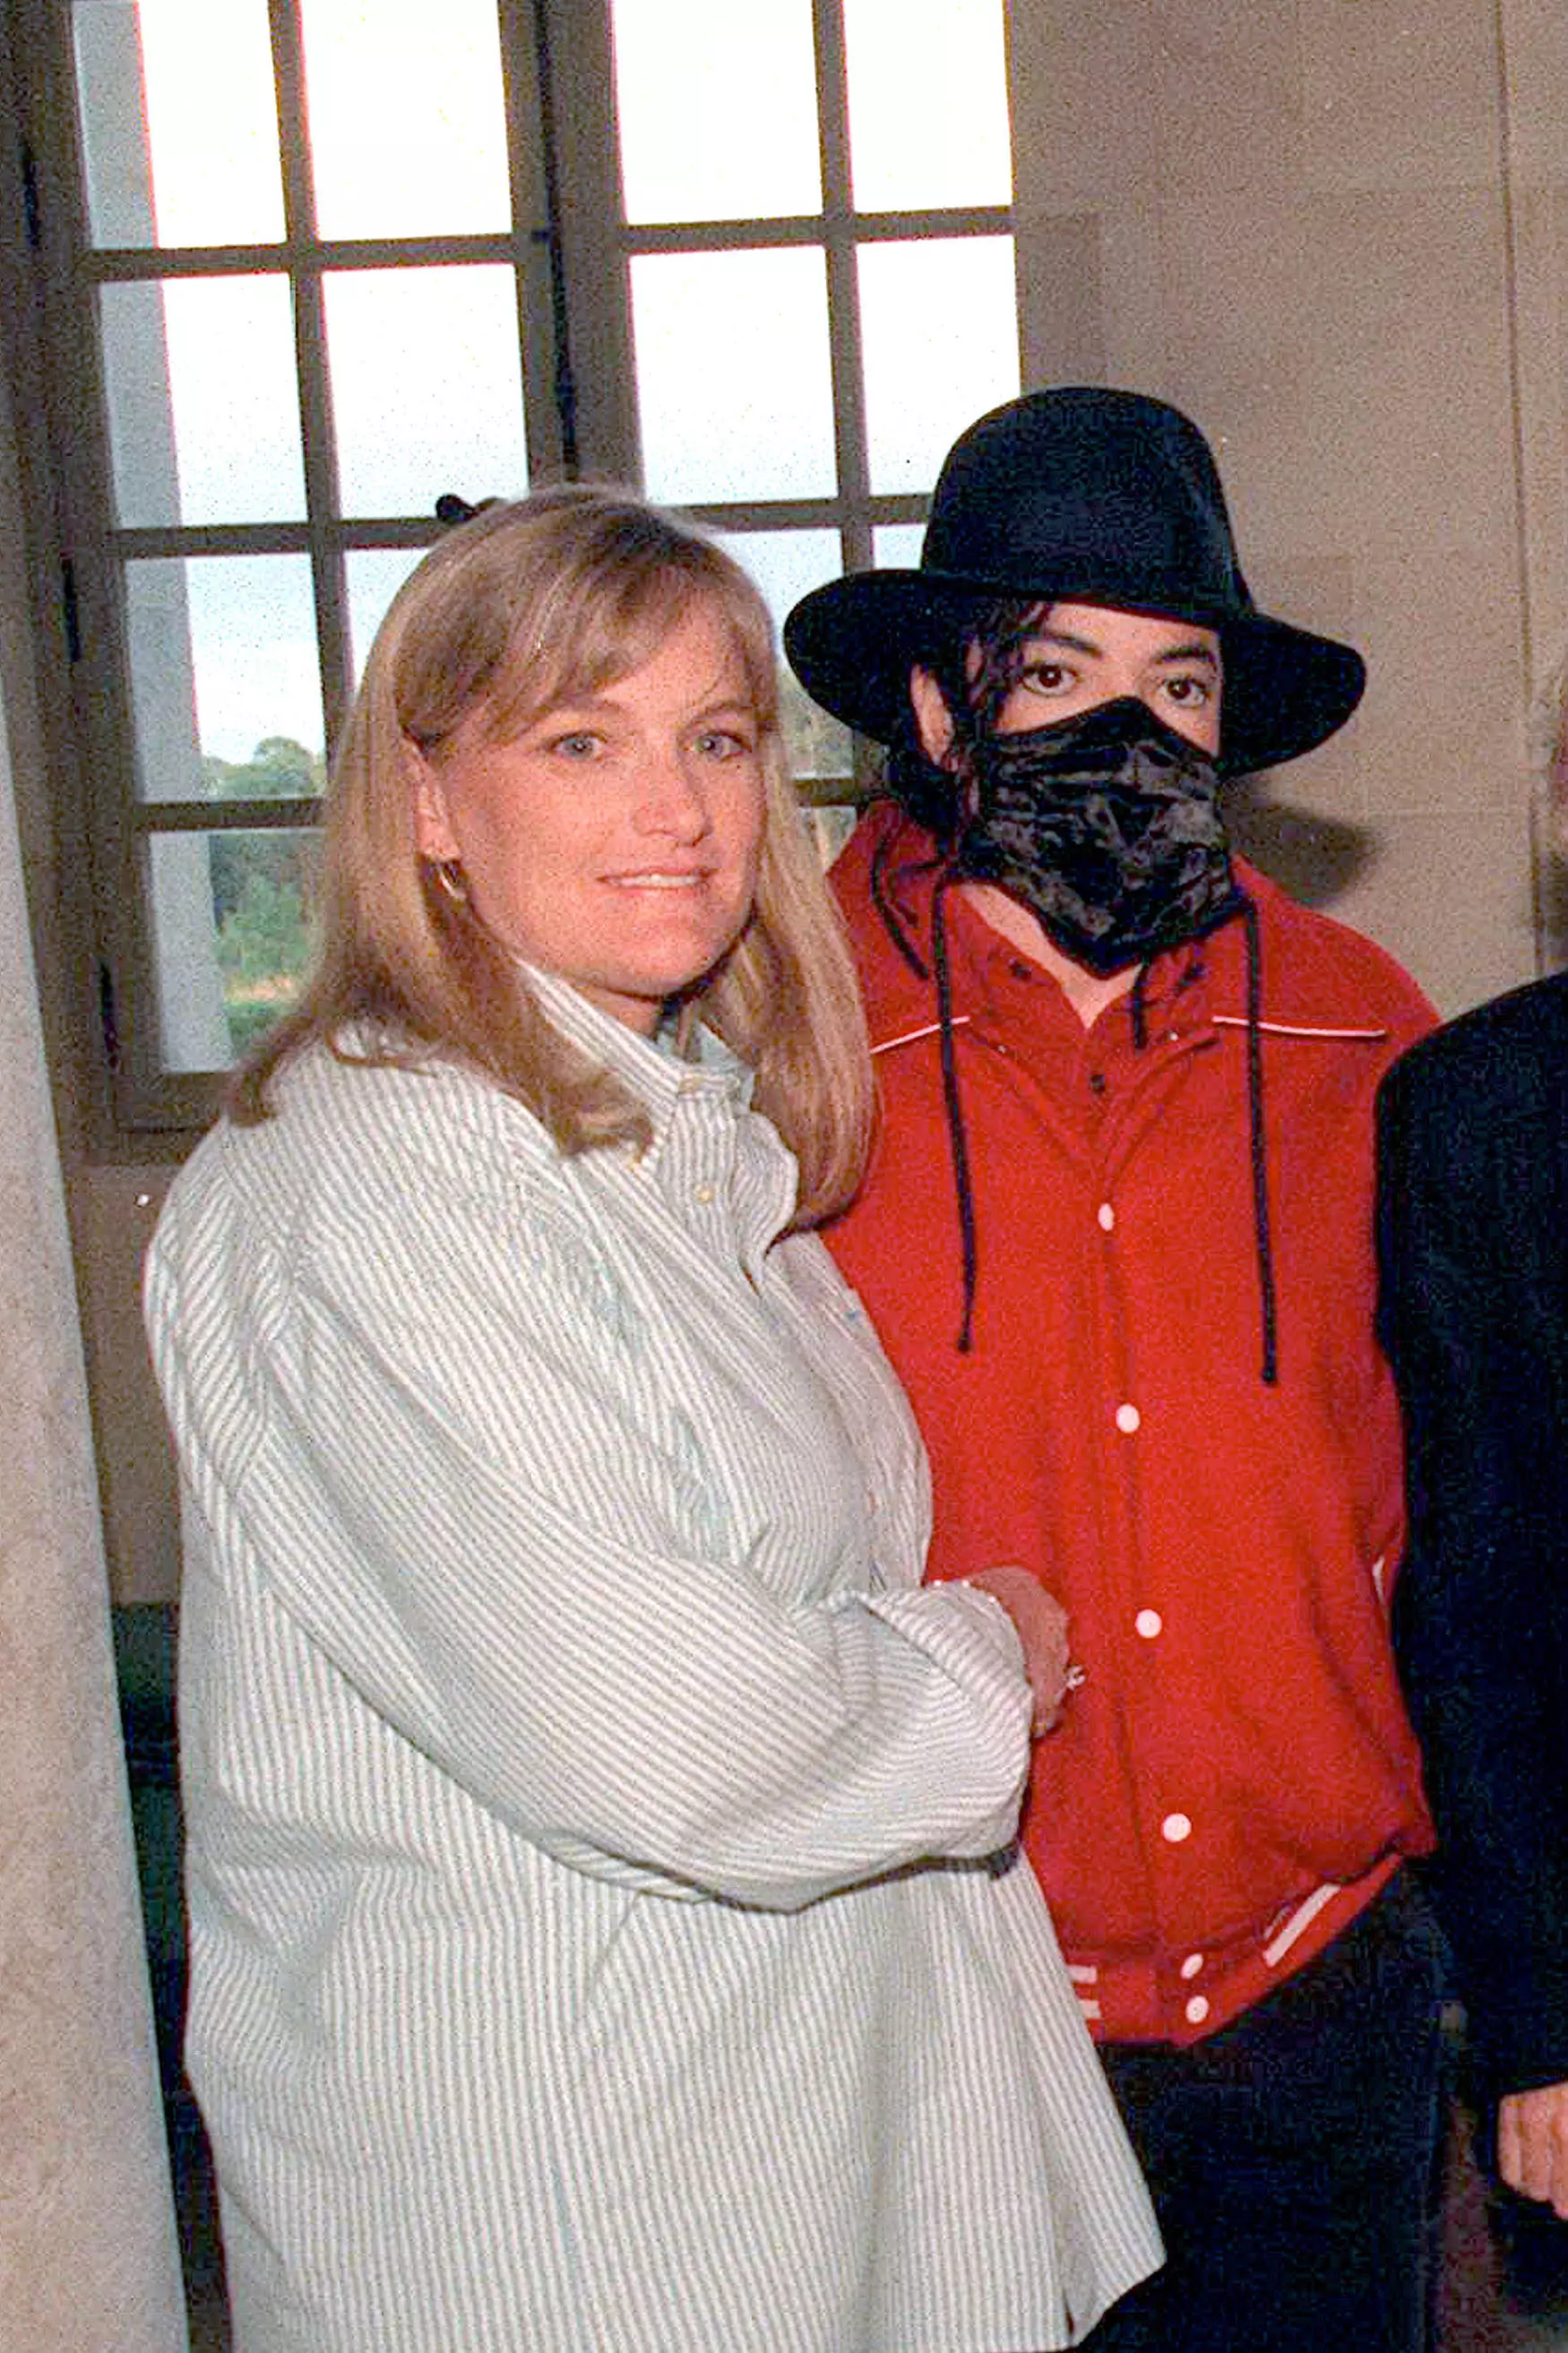 Debbie Rowe and Michael Jackson in 1997.